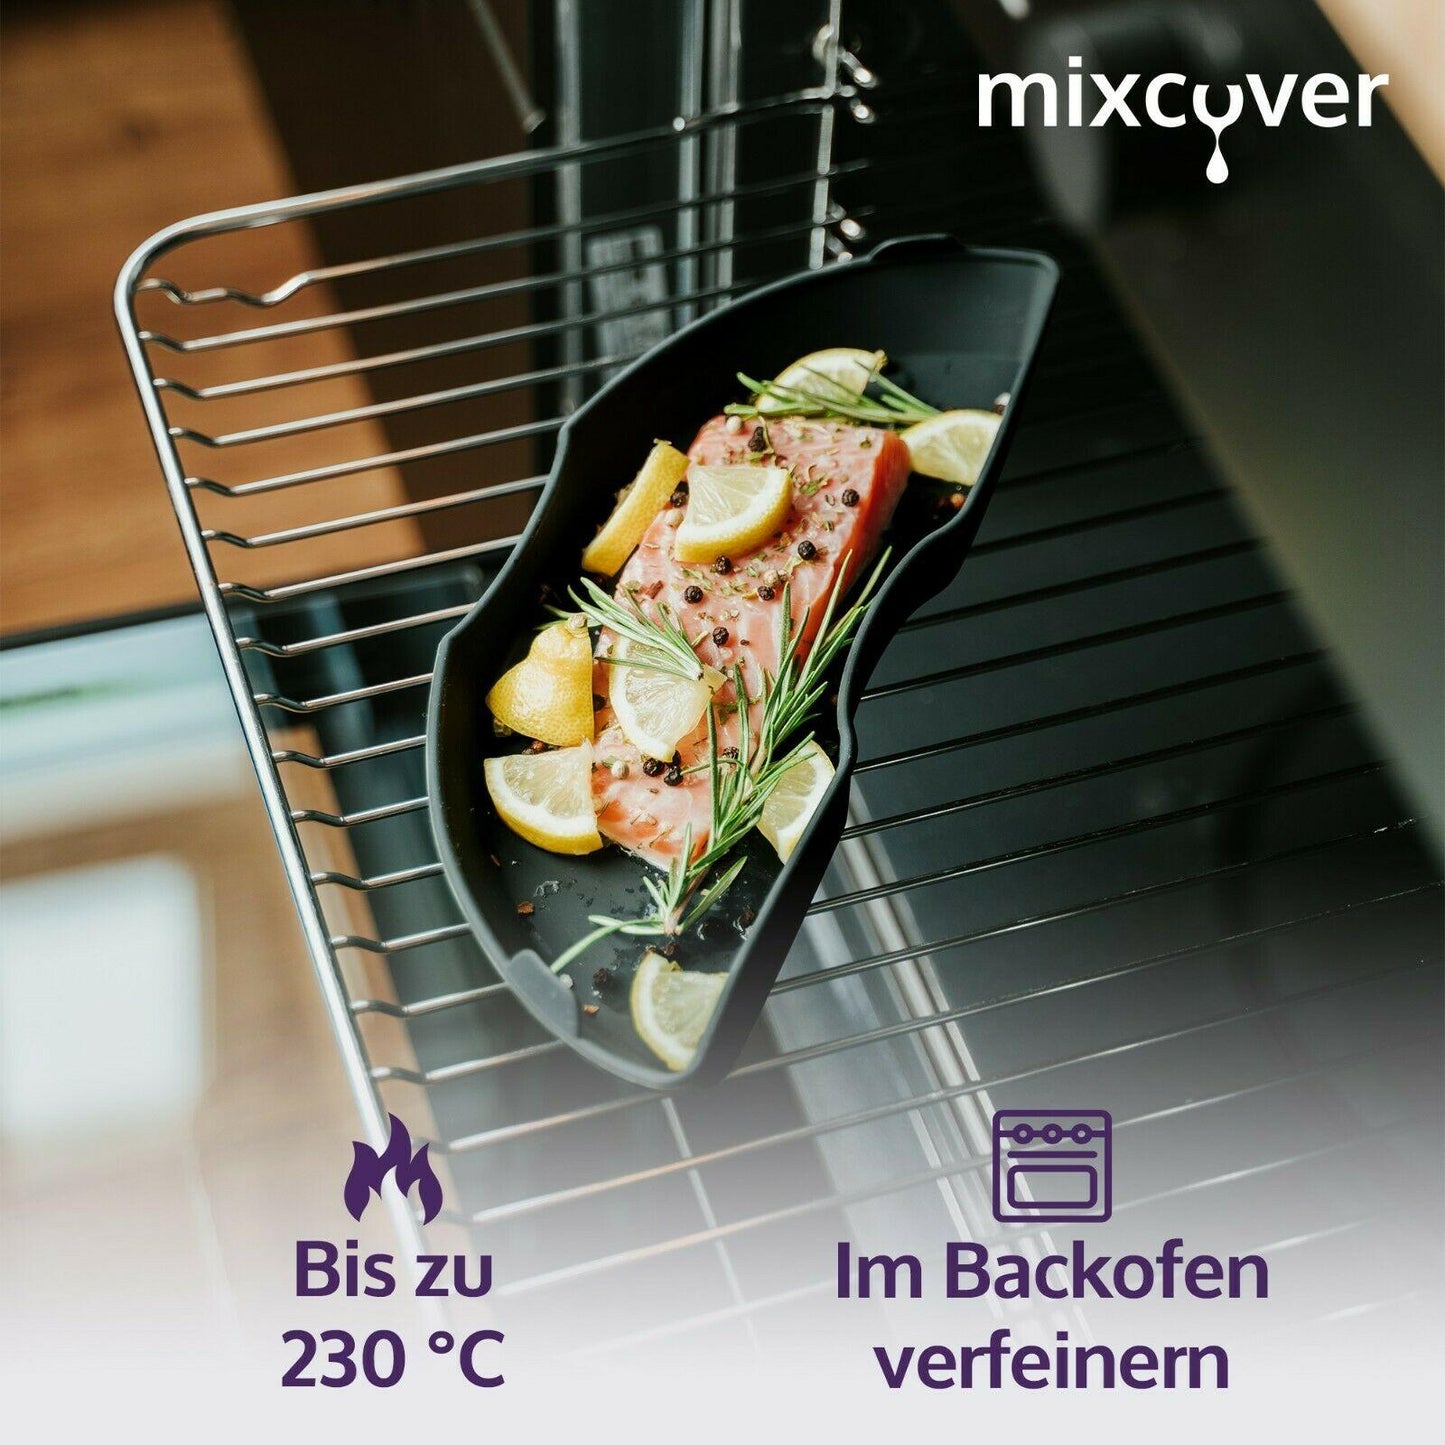 mixcover Dampfgarform Silikonform Auflaufform Halb für Bosch Cookit Dampfgarraum - Mixcover - Mixcover